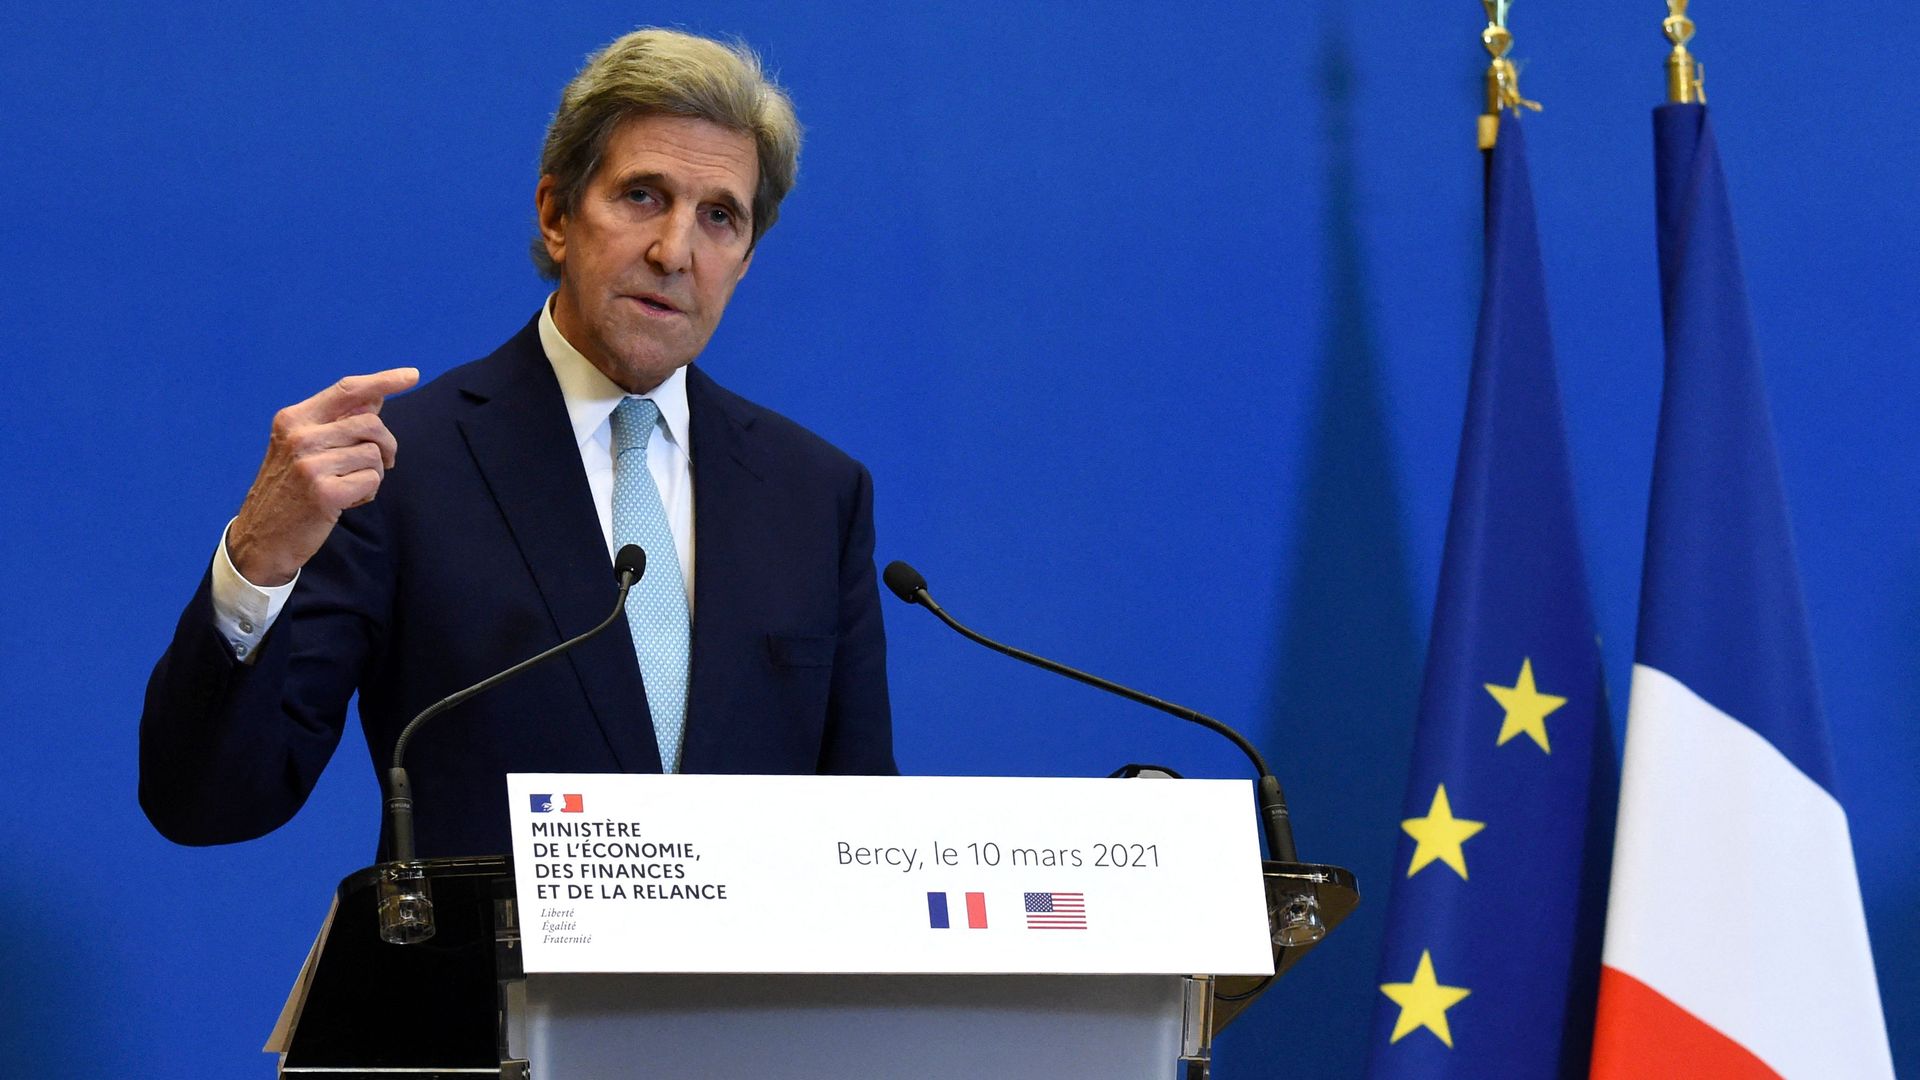 John Kerry speaking in Paris on March 10.